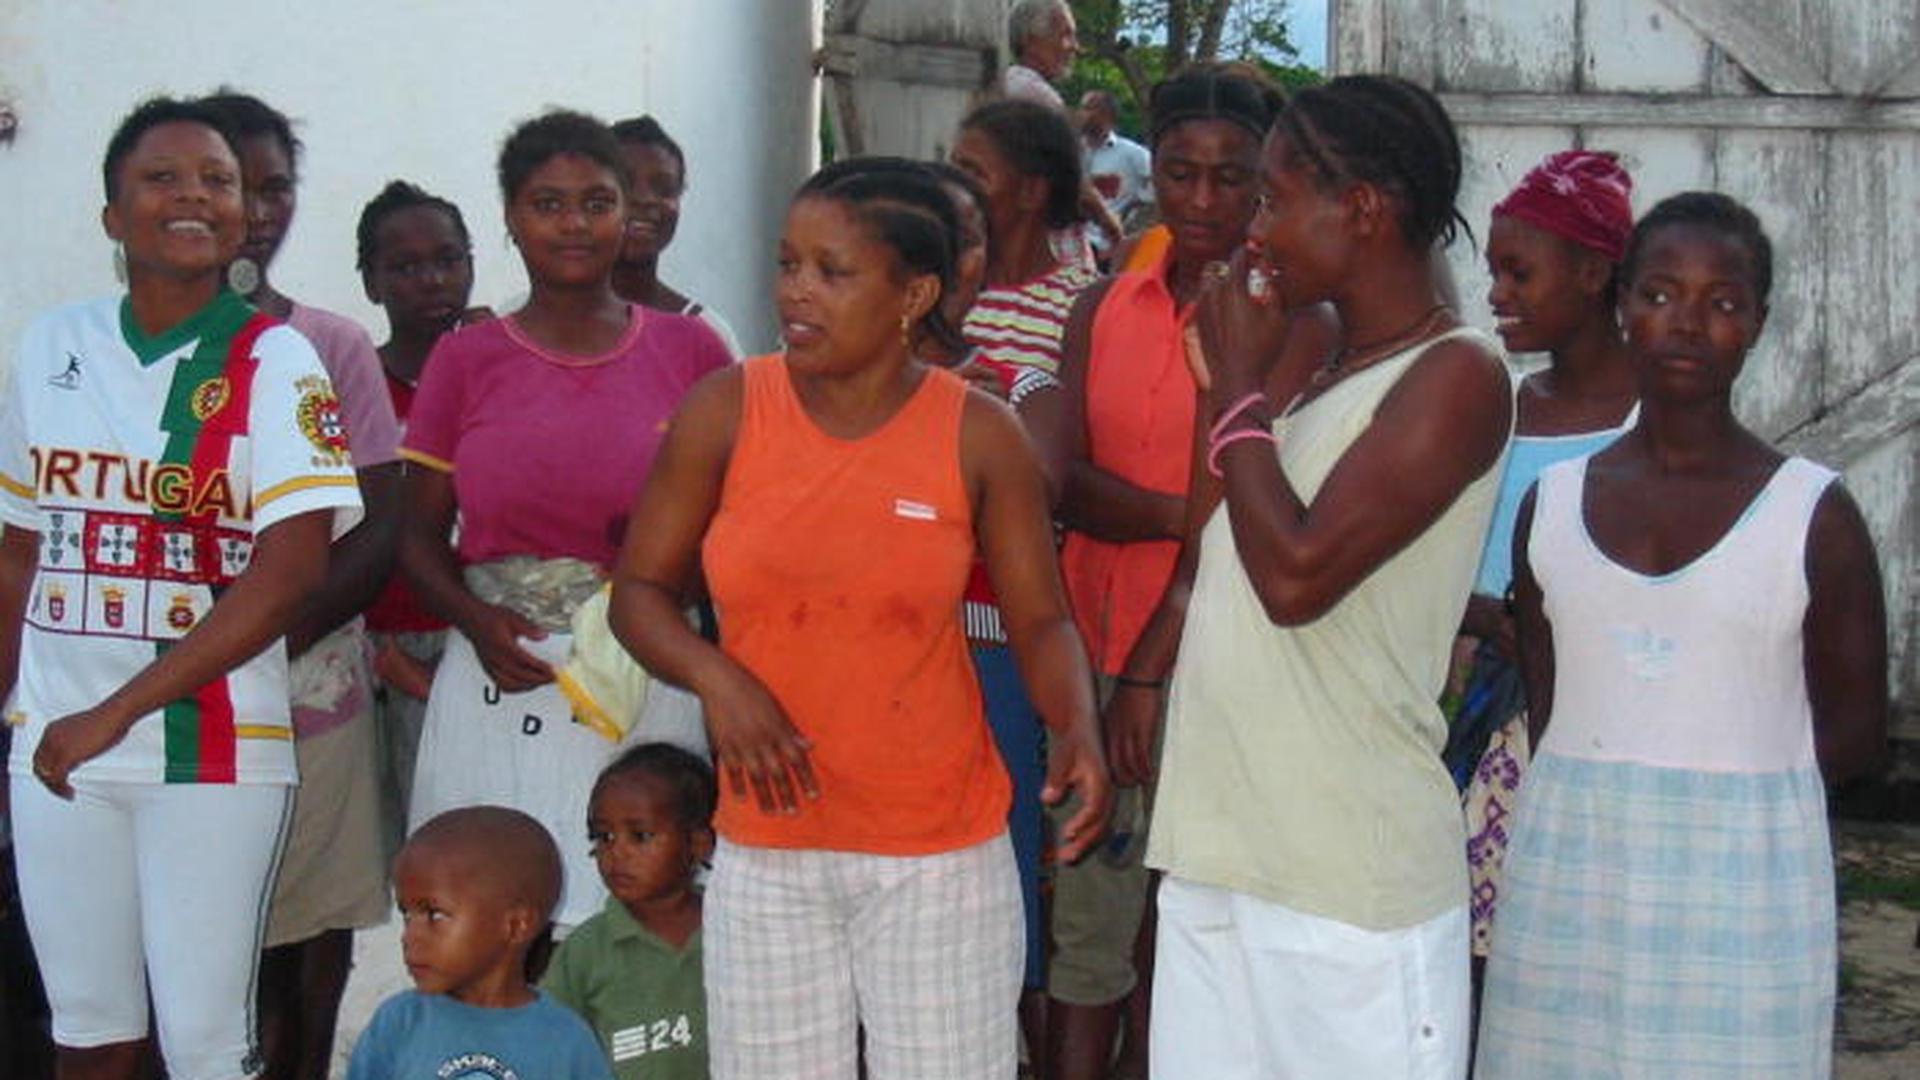 Foto: Instituto das Comunidades de Cabo Verde